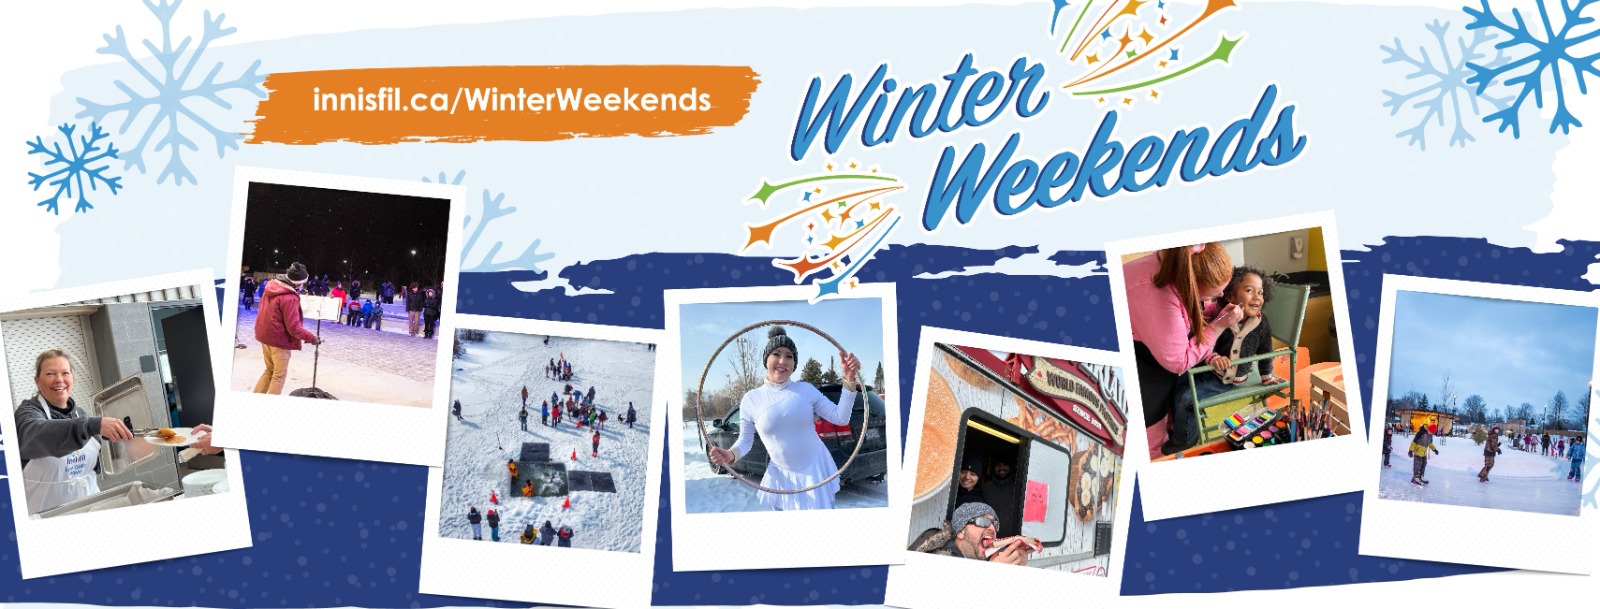 Winter Weekends events